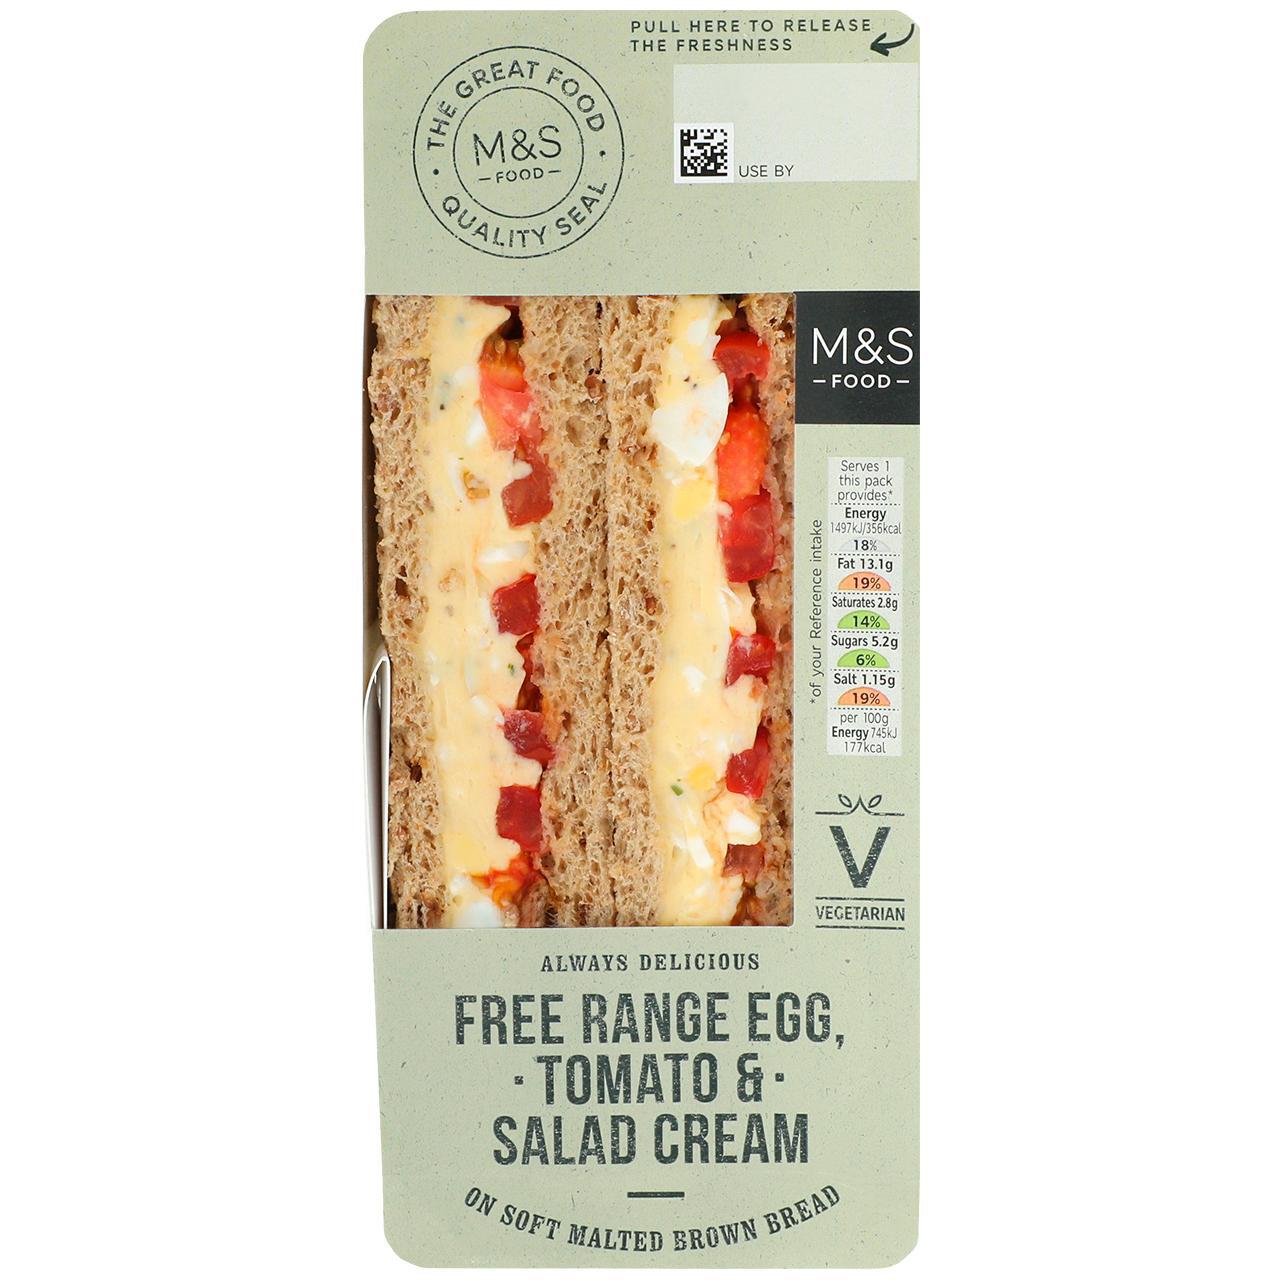 M&S Free Range Egg, Tomato & Salad Cream Sandwich